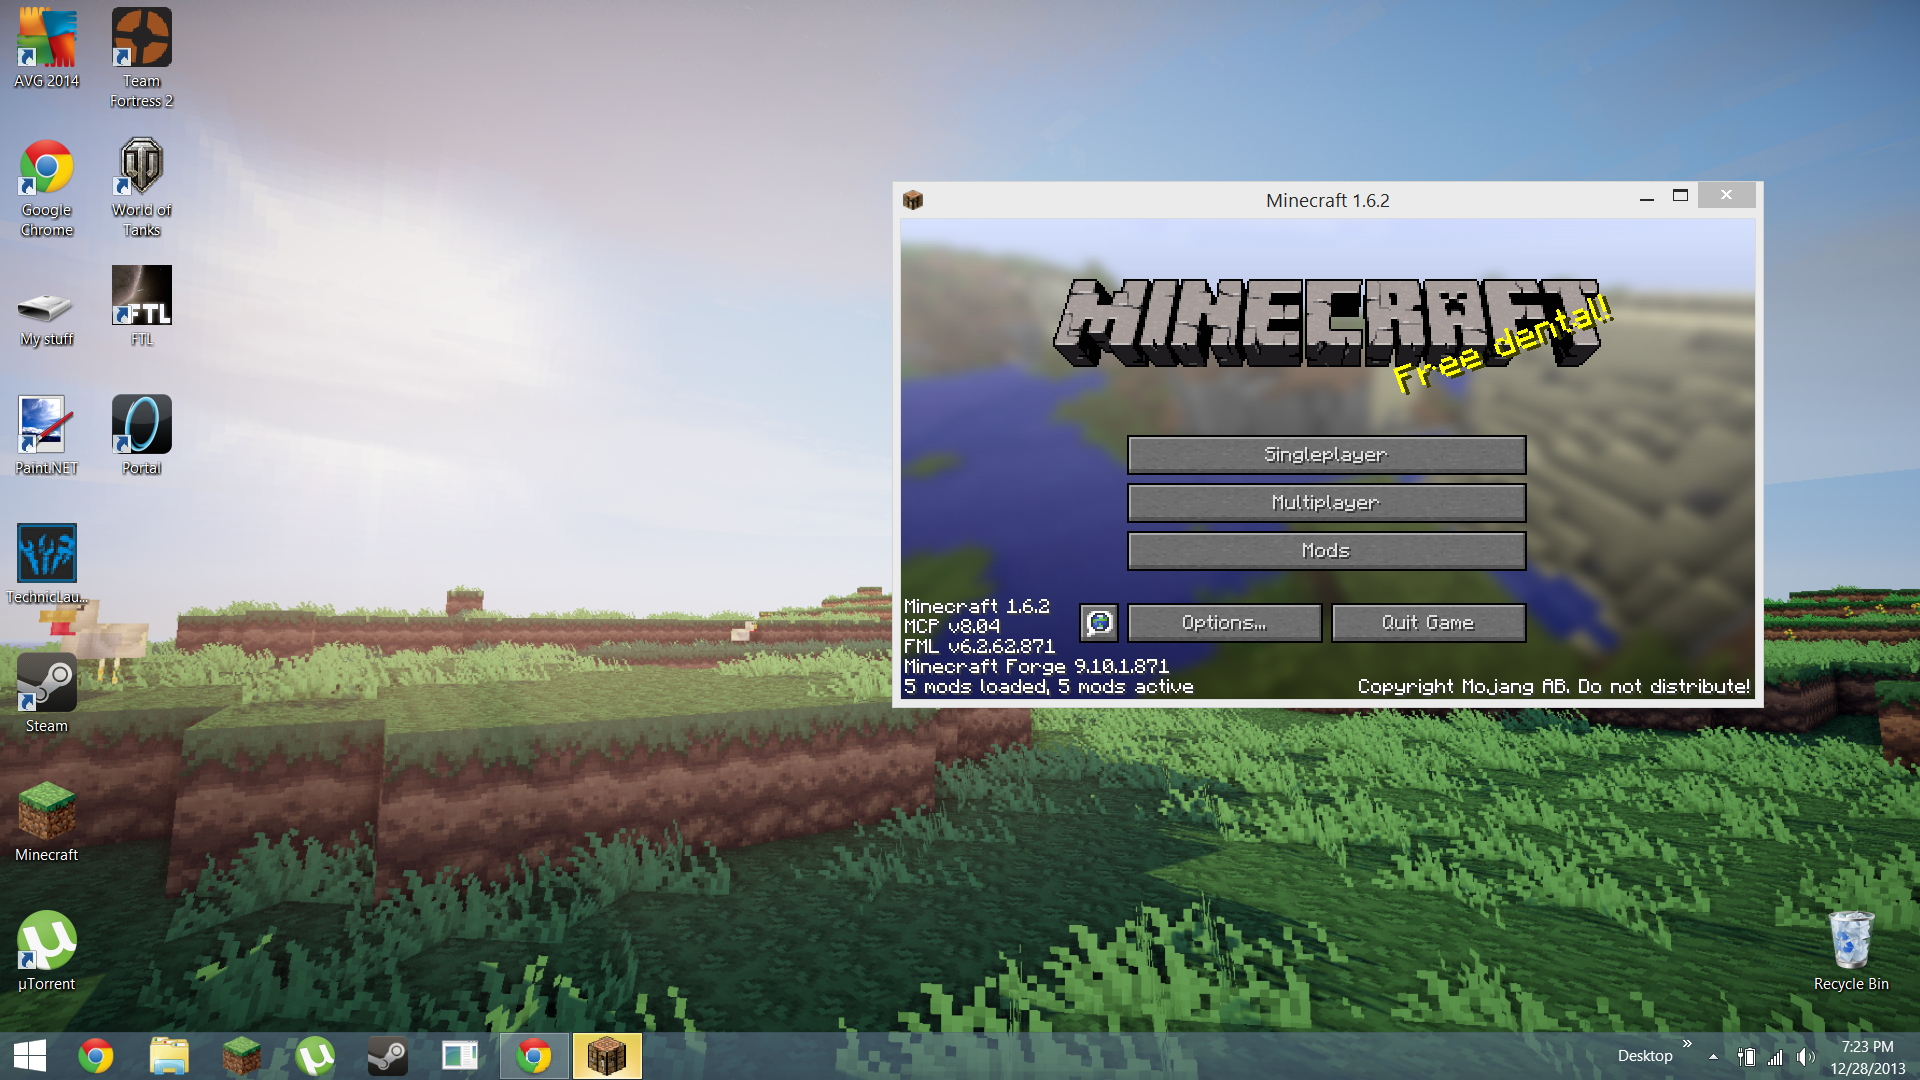 Windows 7 oem theme packs for minecraft